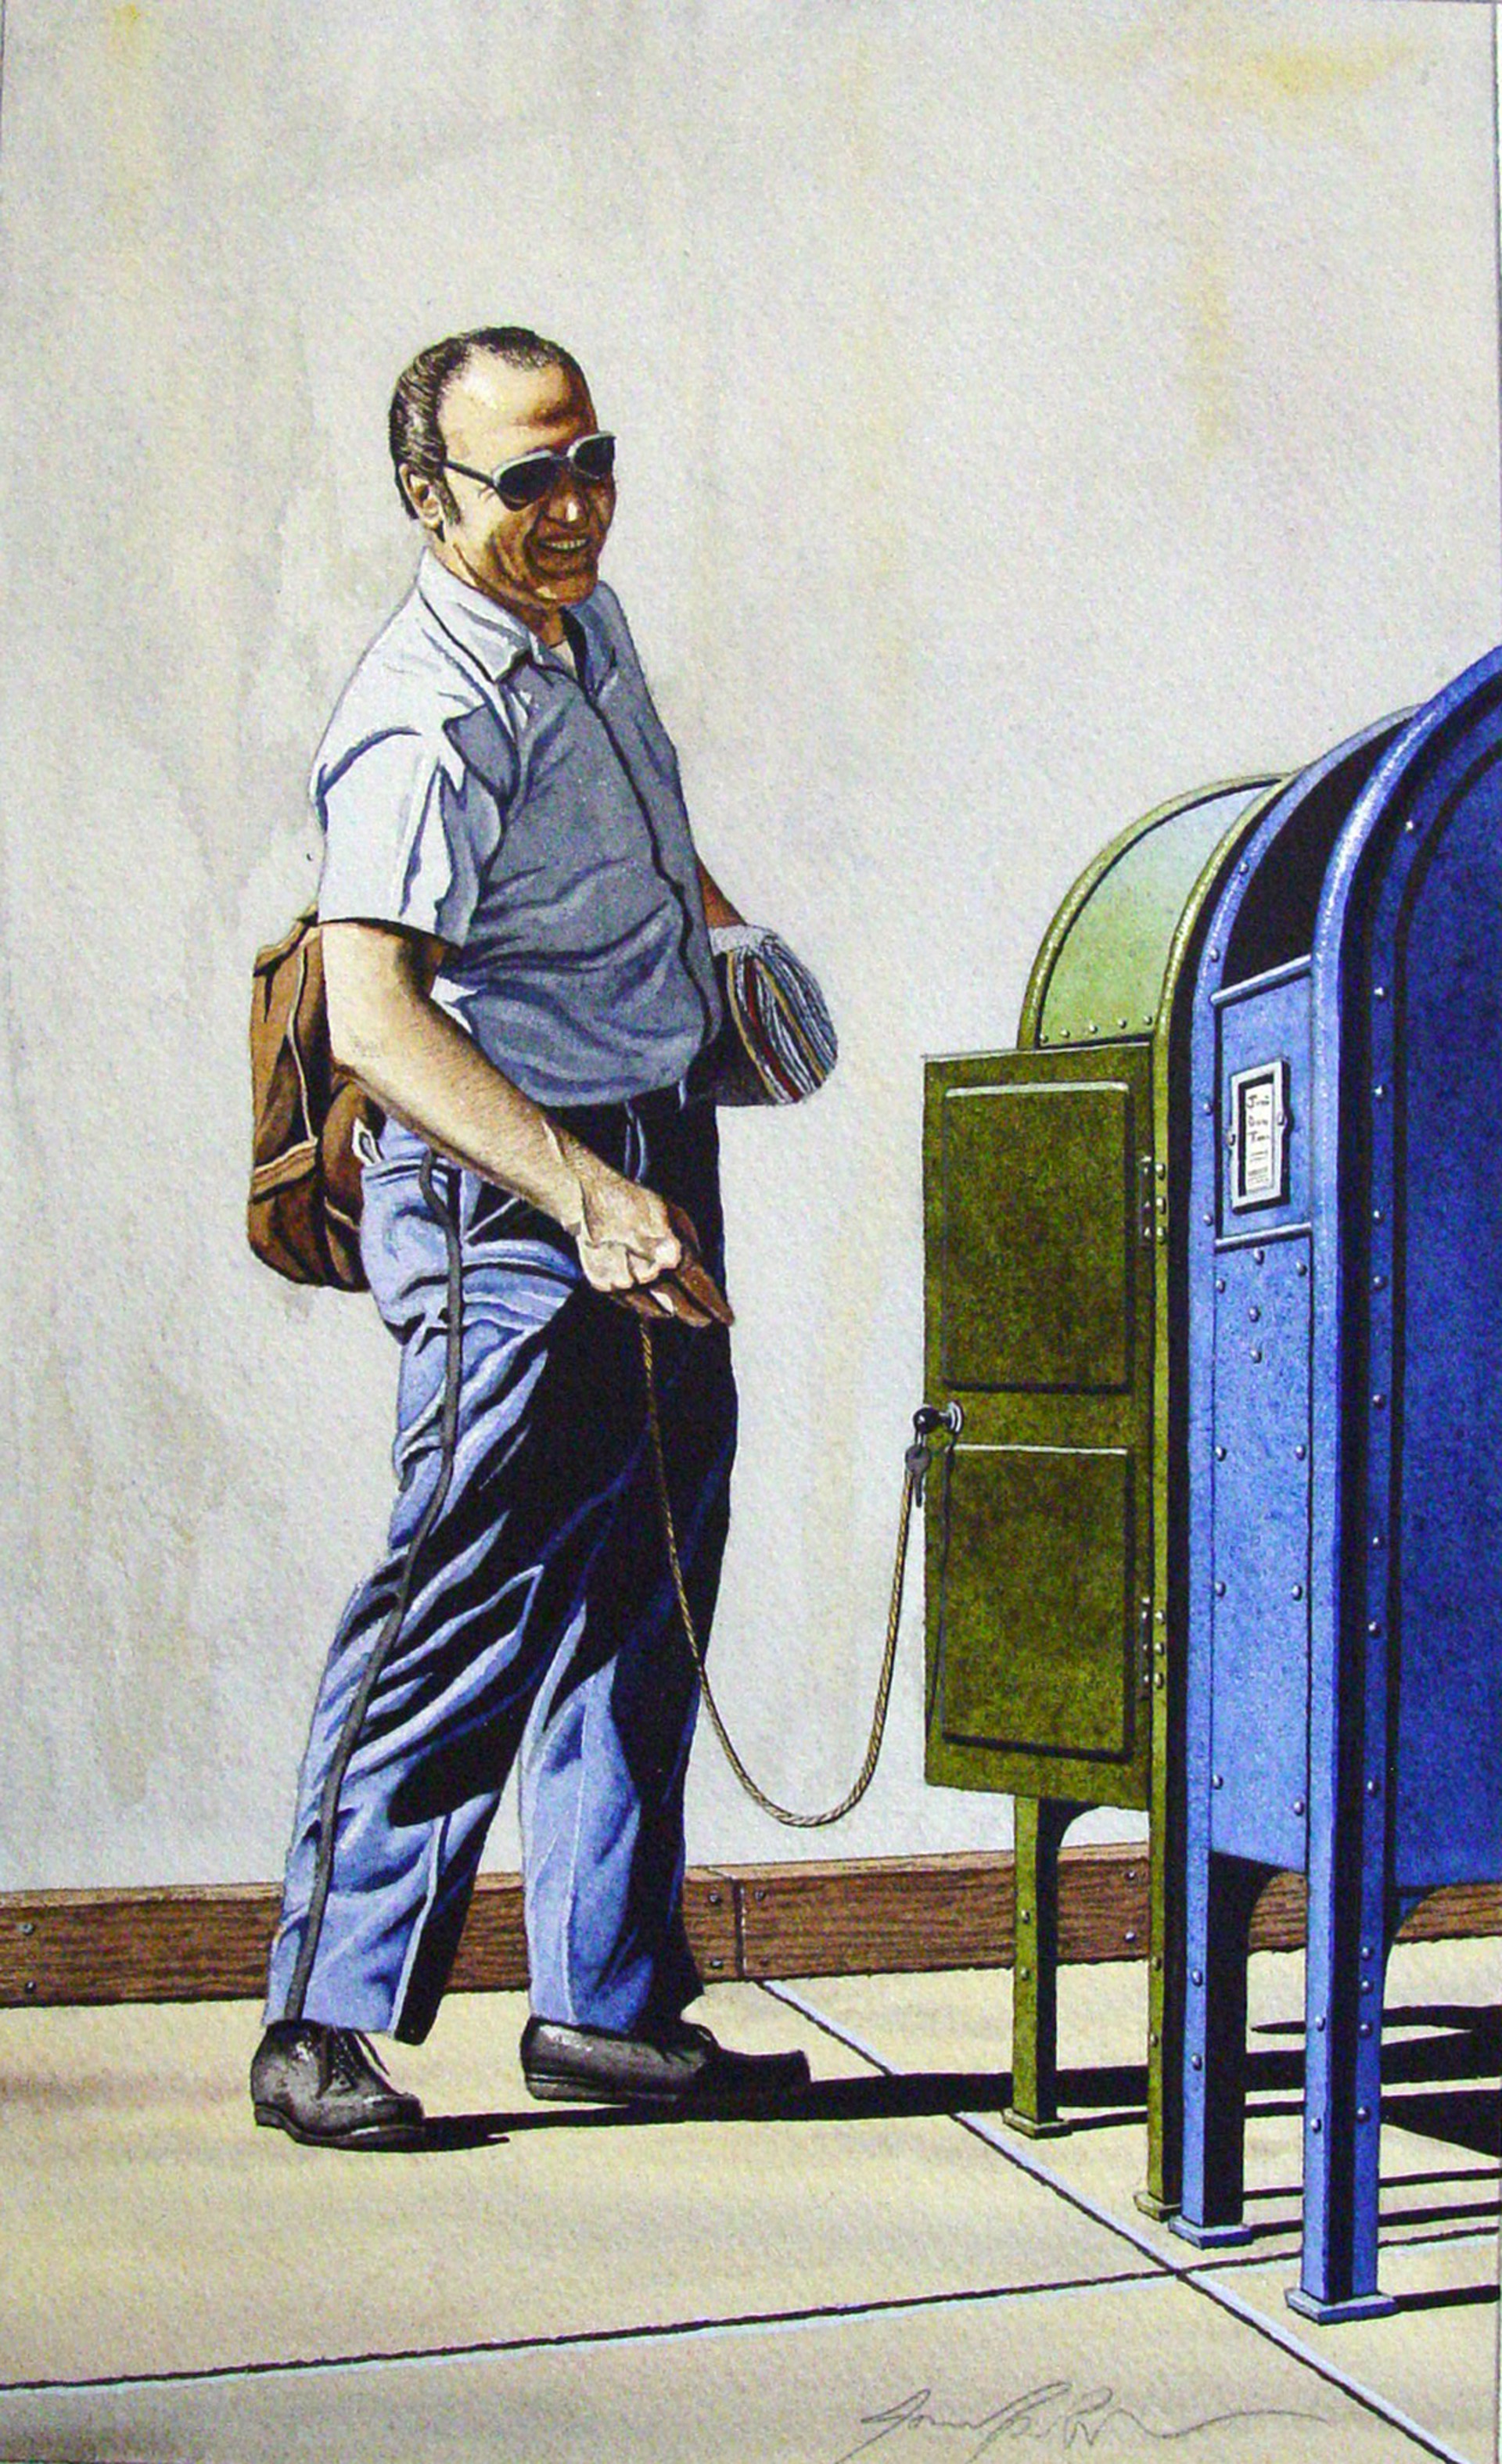 Postman by James Torlakson